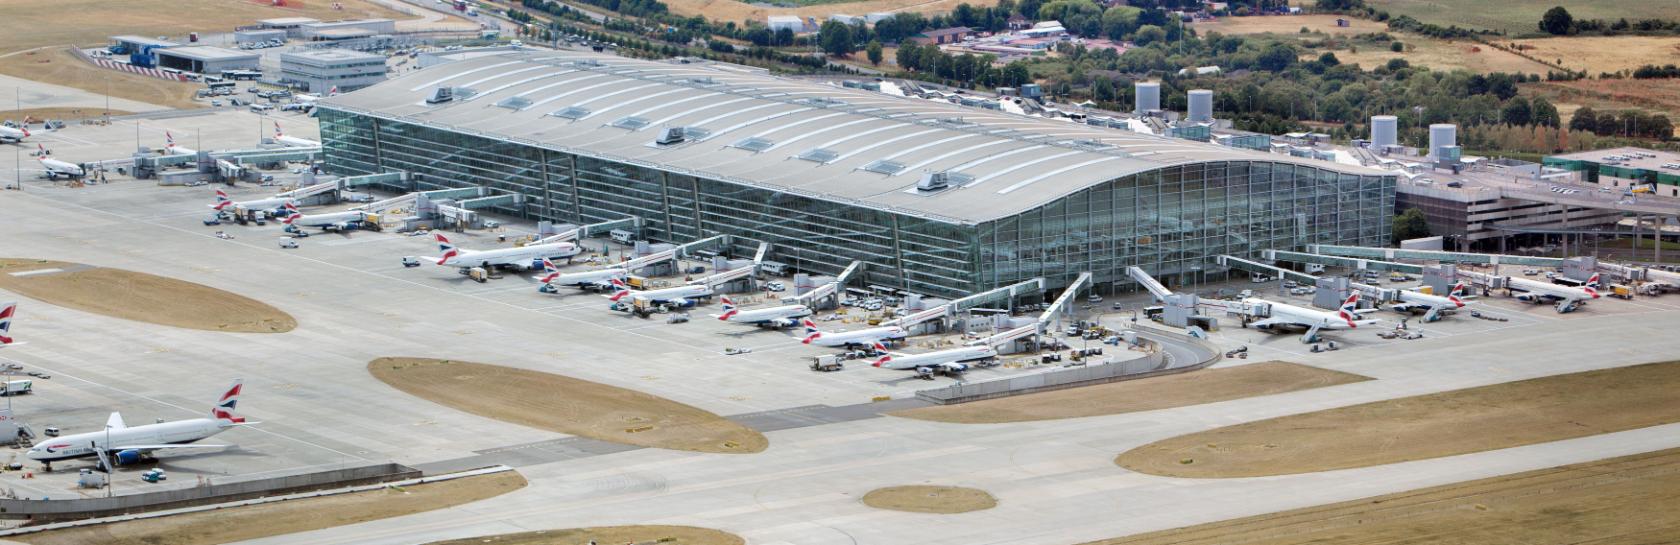 Heathrow Airport Creates a Seamless Door-to-Gate Journey with Atrius ...